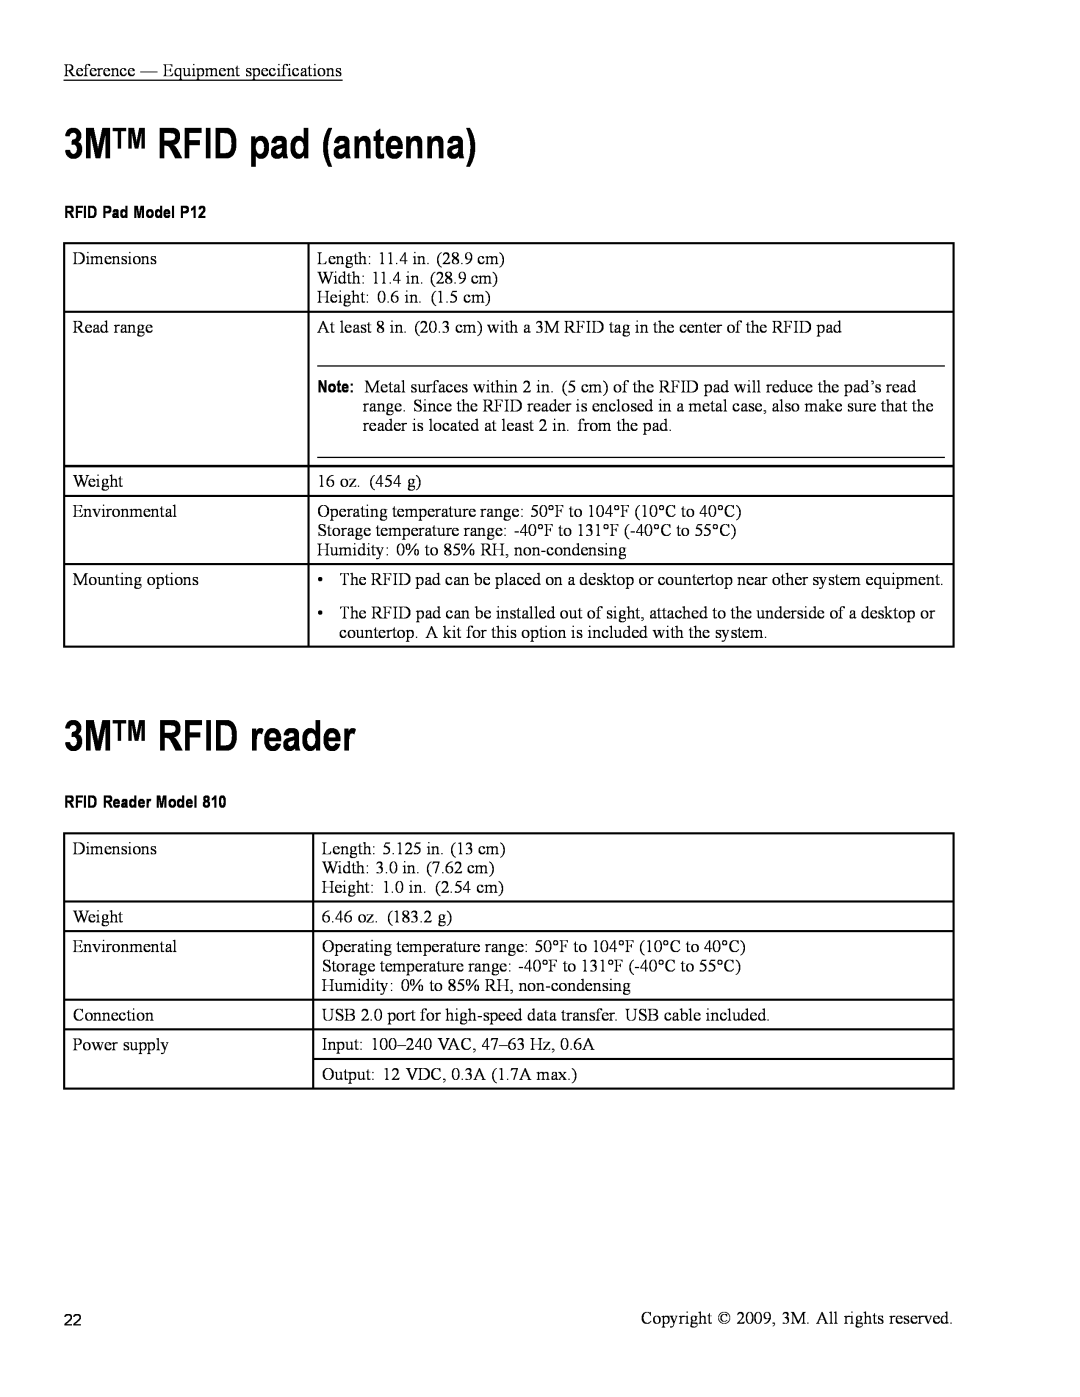 3M 813 owner manual 3MTM RFID pad antenna, 3MTM RFID reader, RFID Pad Model P12, RFID Reader Model 